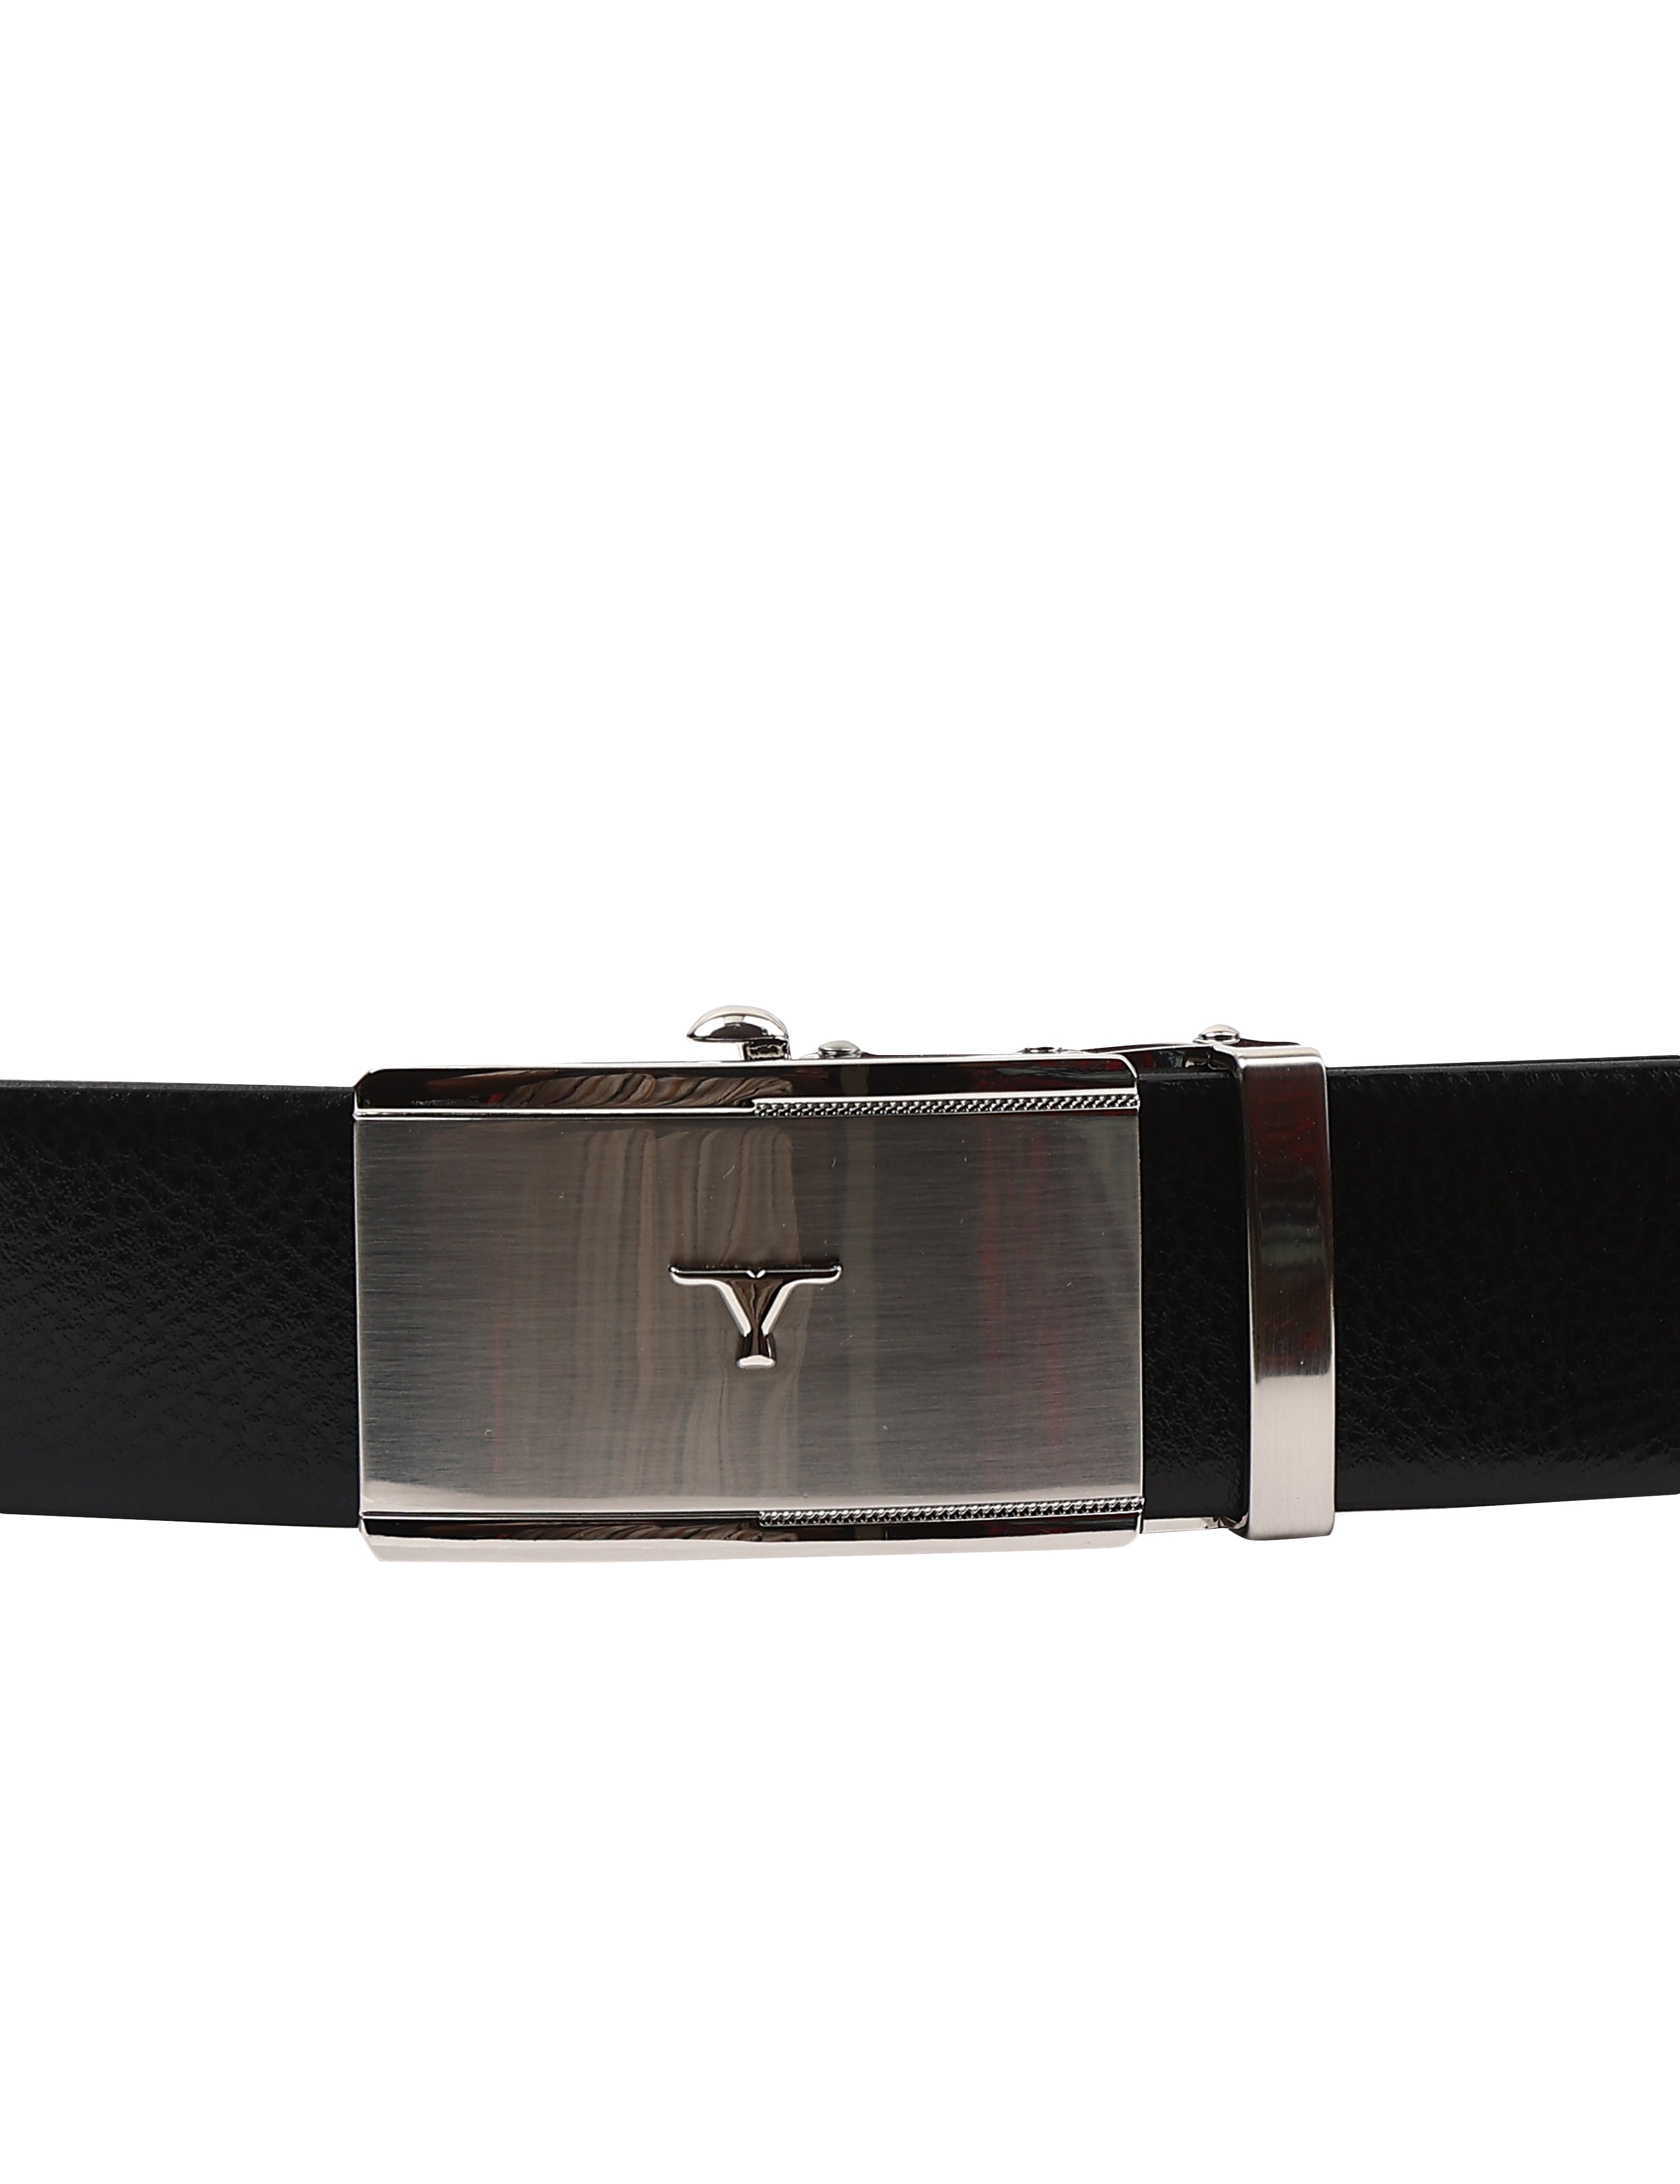 Bulchee Men's Collection | Italian Leather | Black & Tan Reversible Belt | Autolock in Shiny Nickle  | BUL2320B